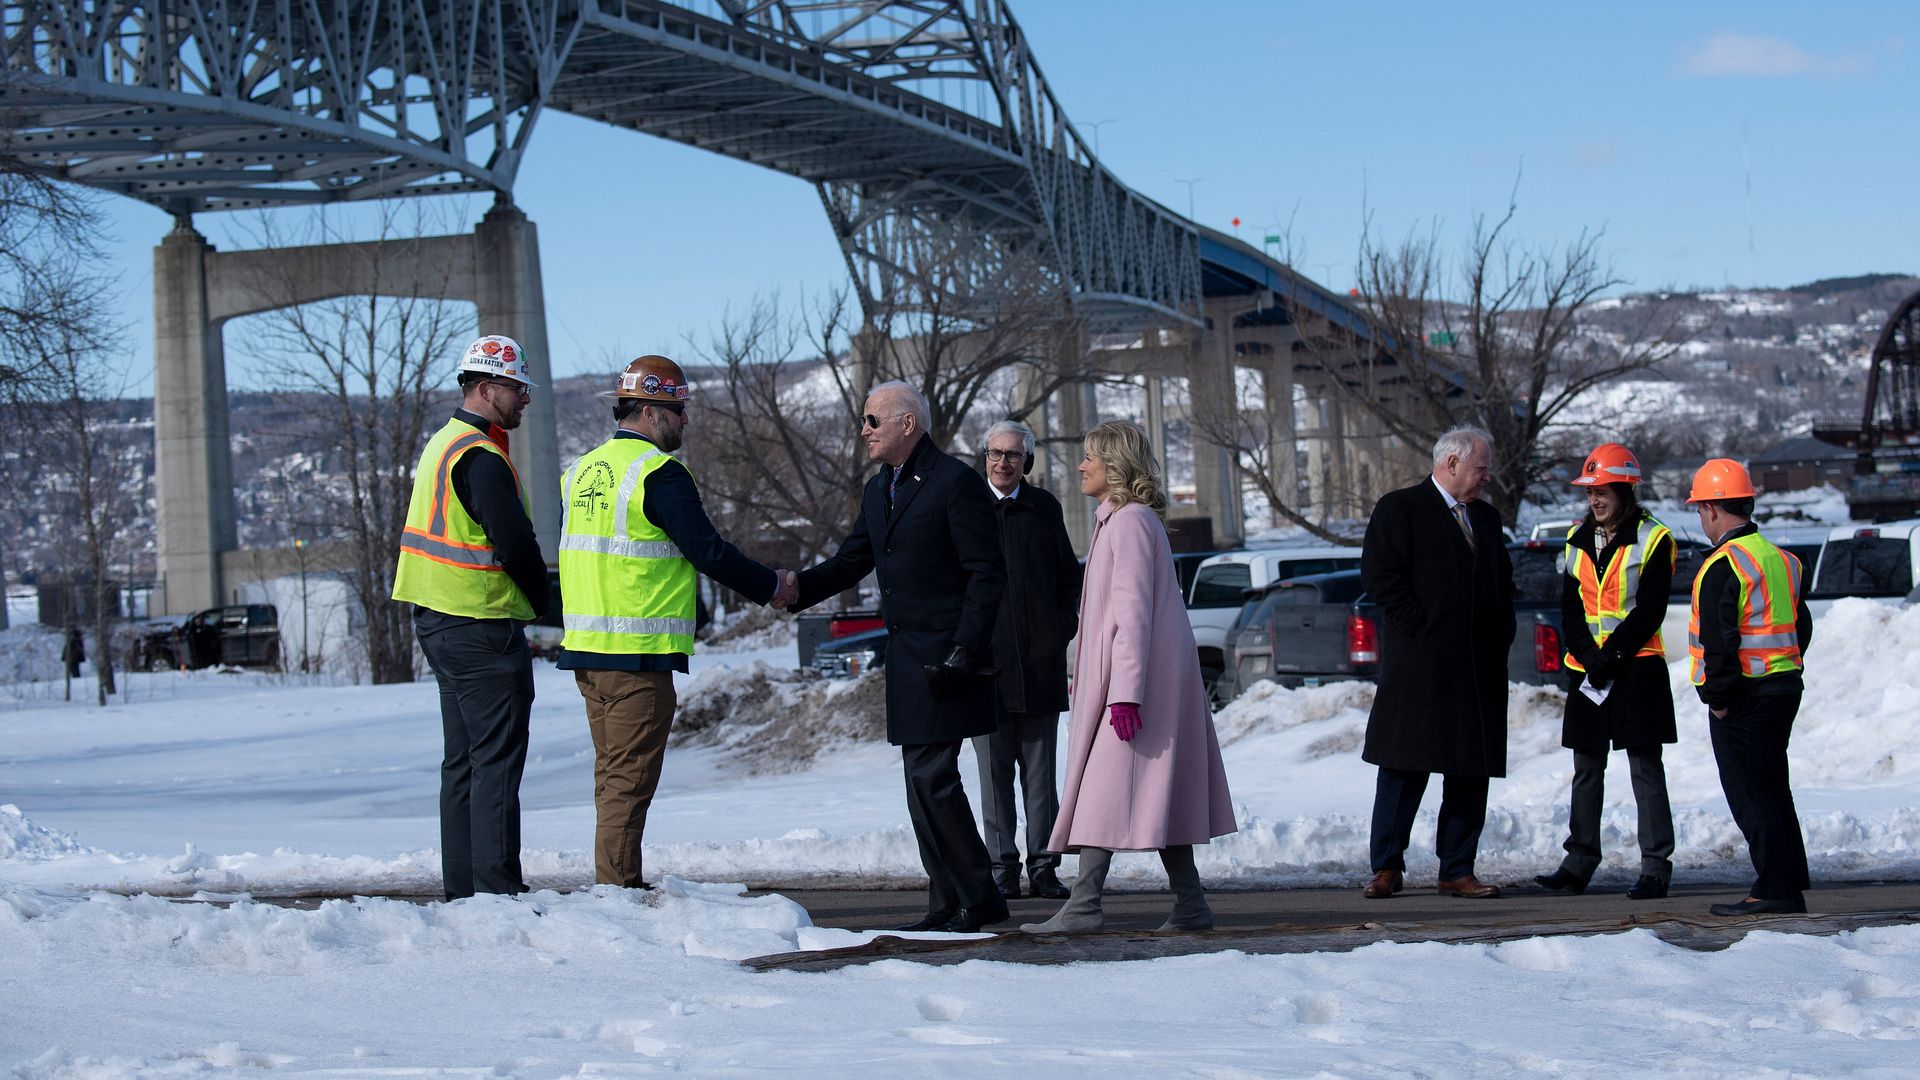 President Joe Biden and First Lady Jill Biden visit workers near the John A. Blatnik Memorial Bridge in Superior, Wisconsin, on March 2, 2022. Photo by BRENDAN SMIALOWSKI/AFP via Getty Images